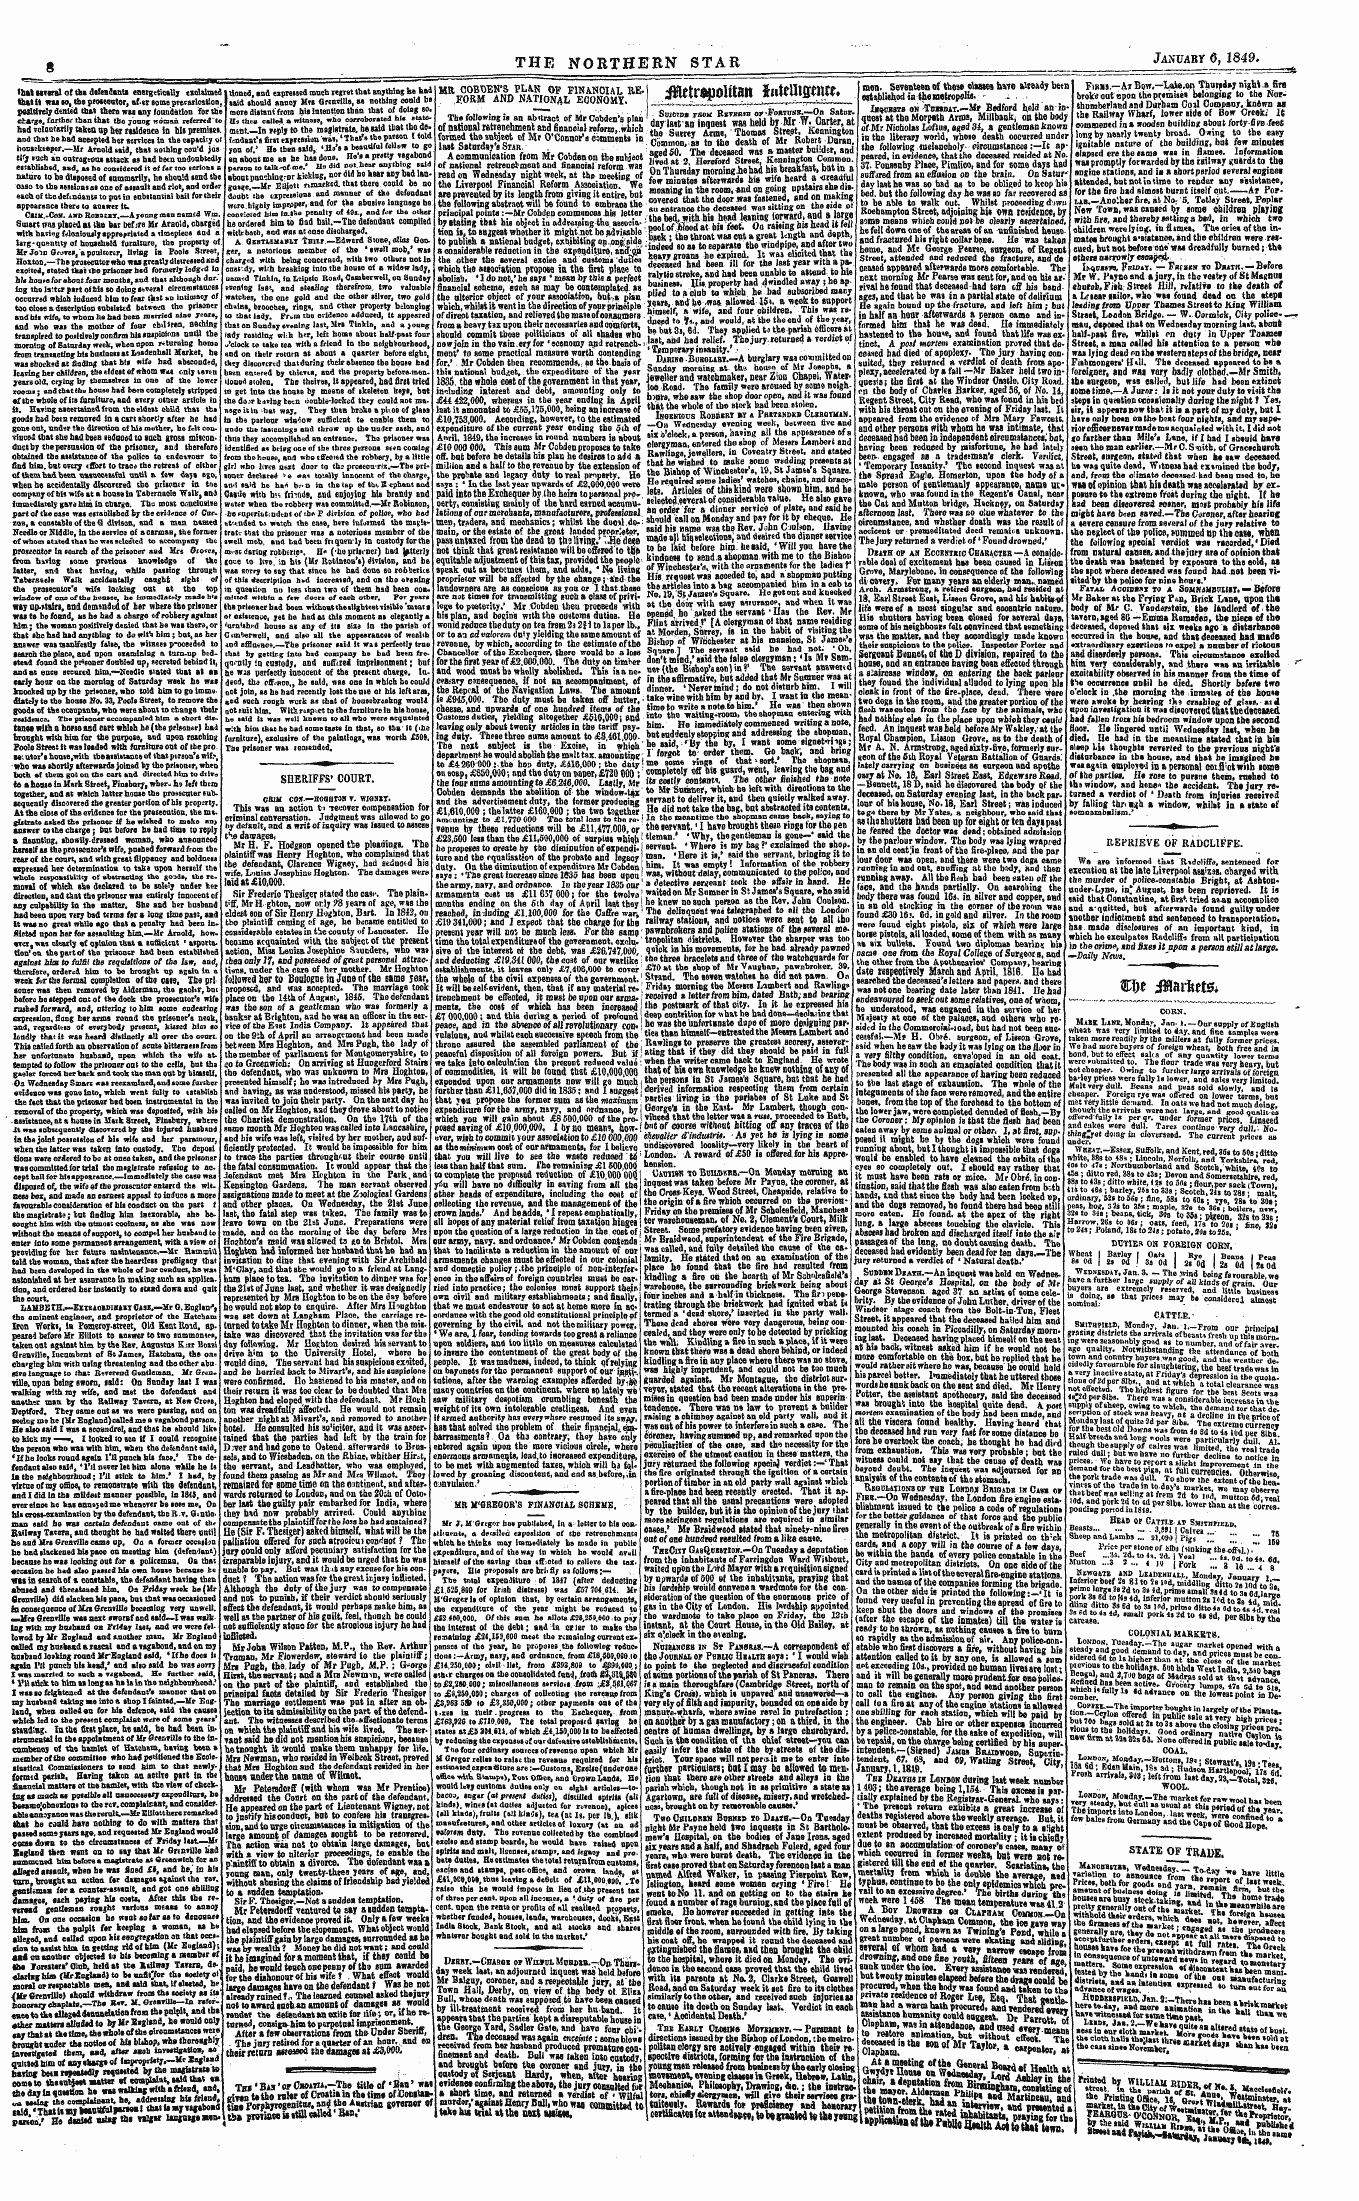 Northern Star (1837-1852): jS F Y, 3rd edition - €I)T Mnvhttz.